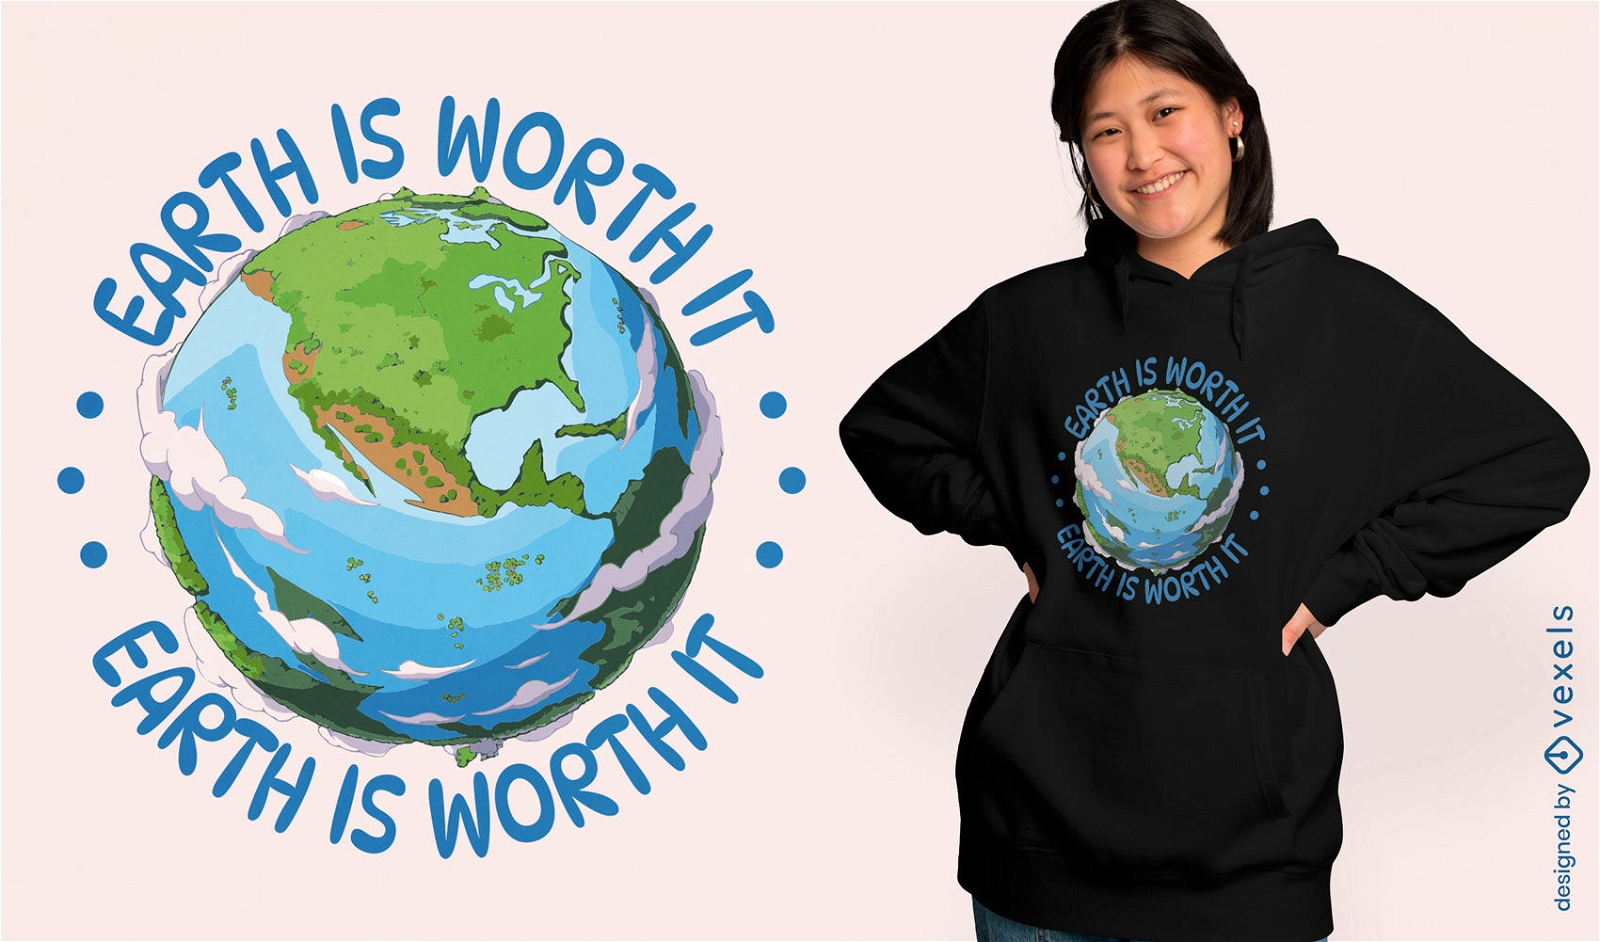 Earth is worth it t-shirt design